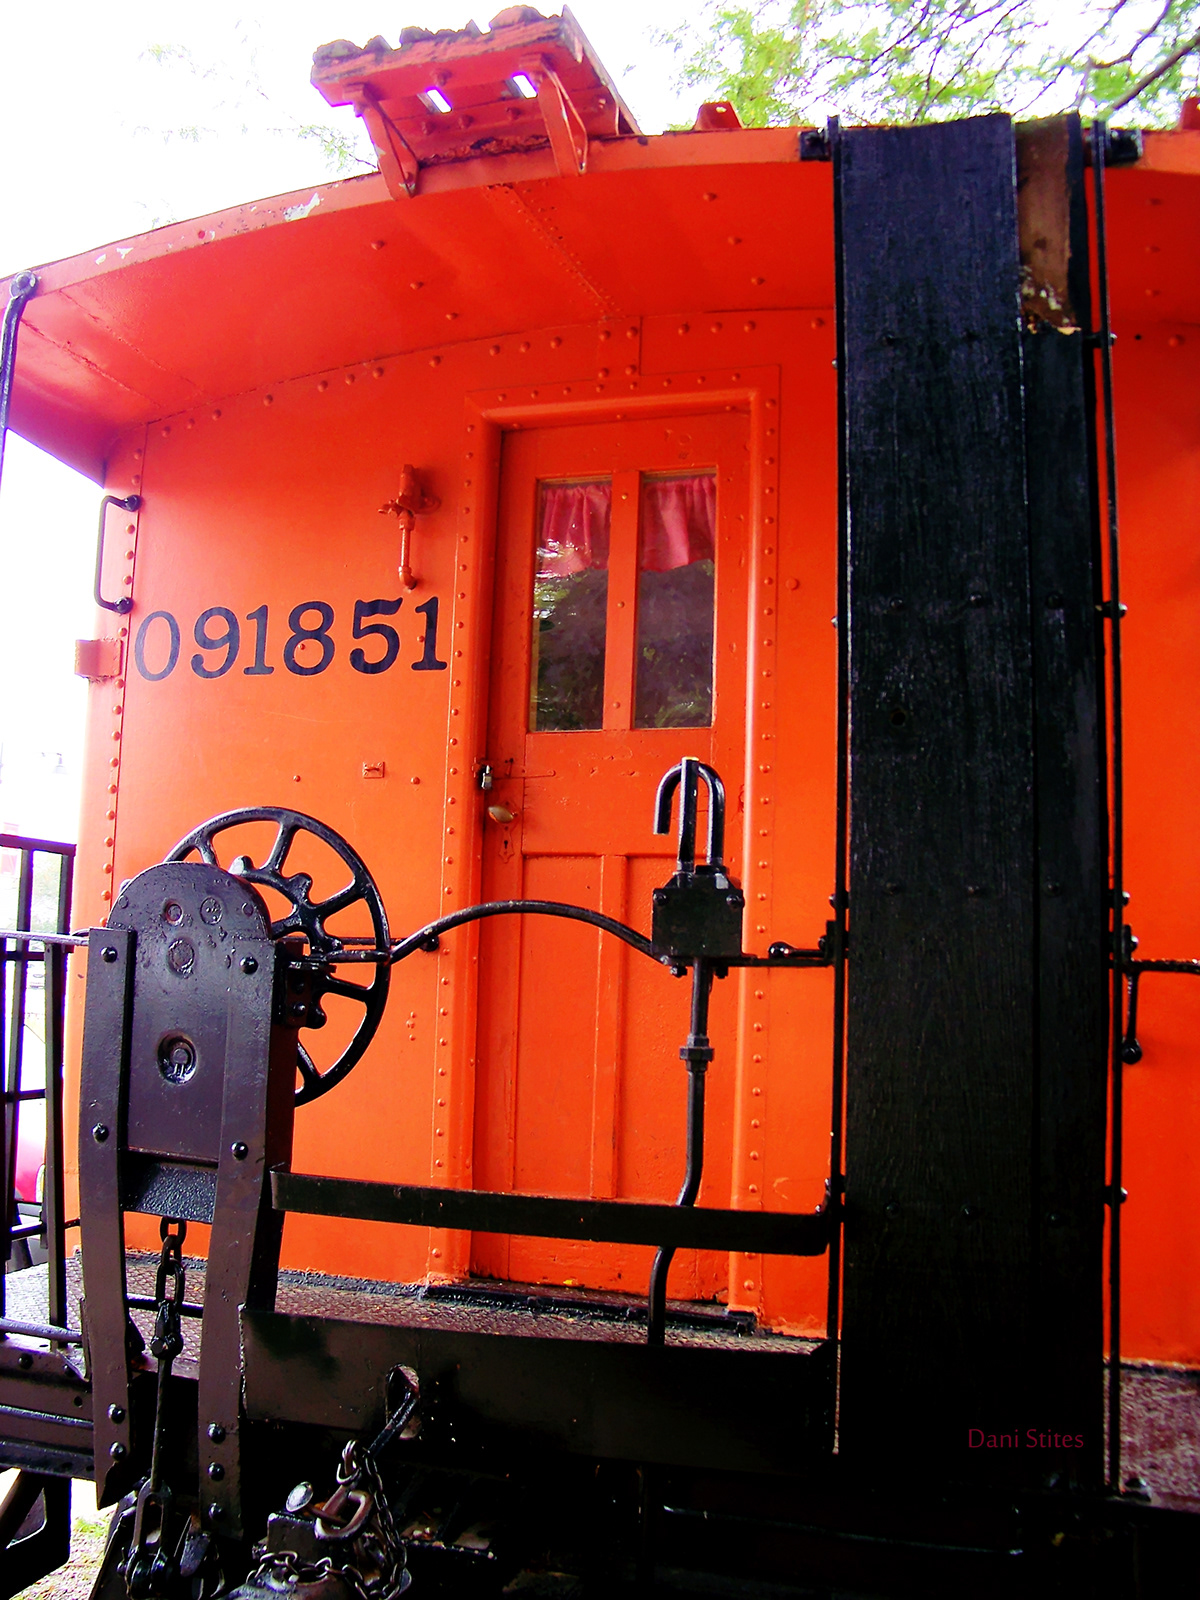 caboose orange railroad train Train Car windows